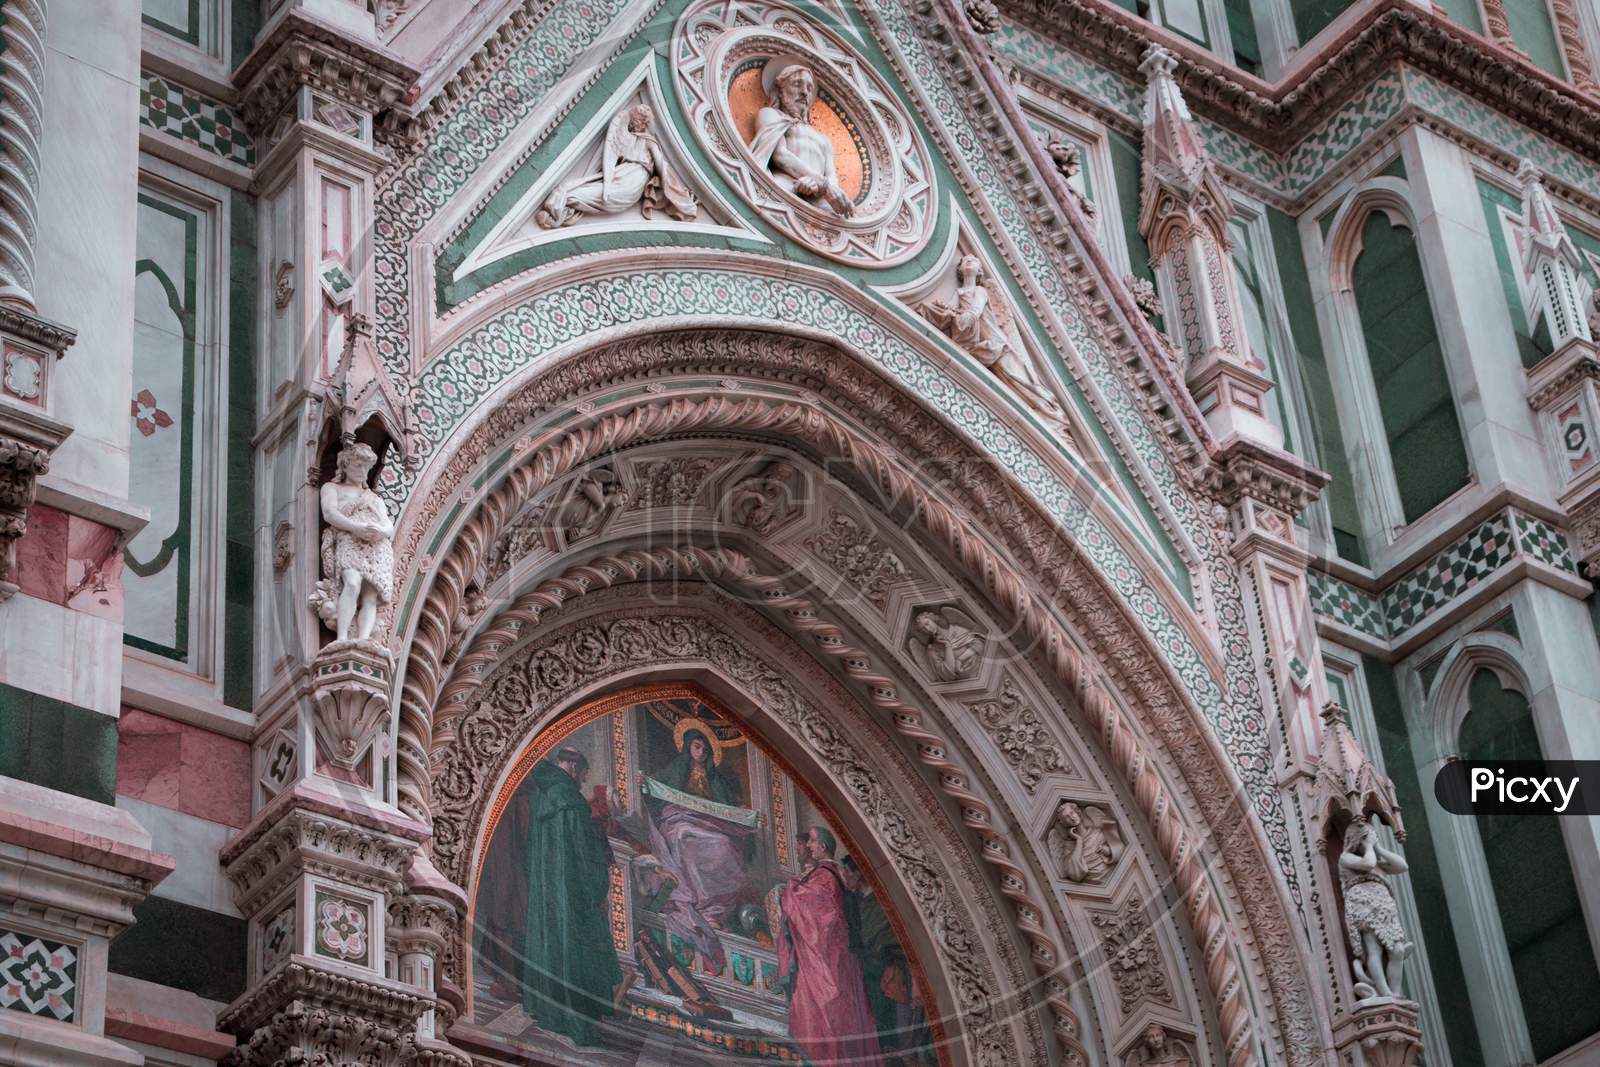 Art on the side walls of Santa Maria del fiore